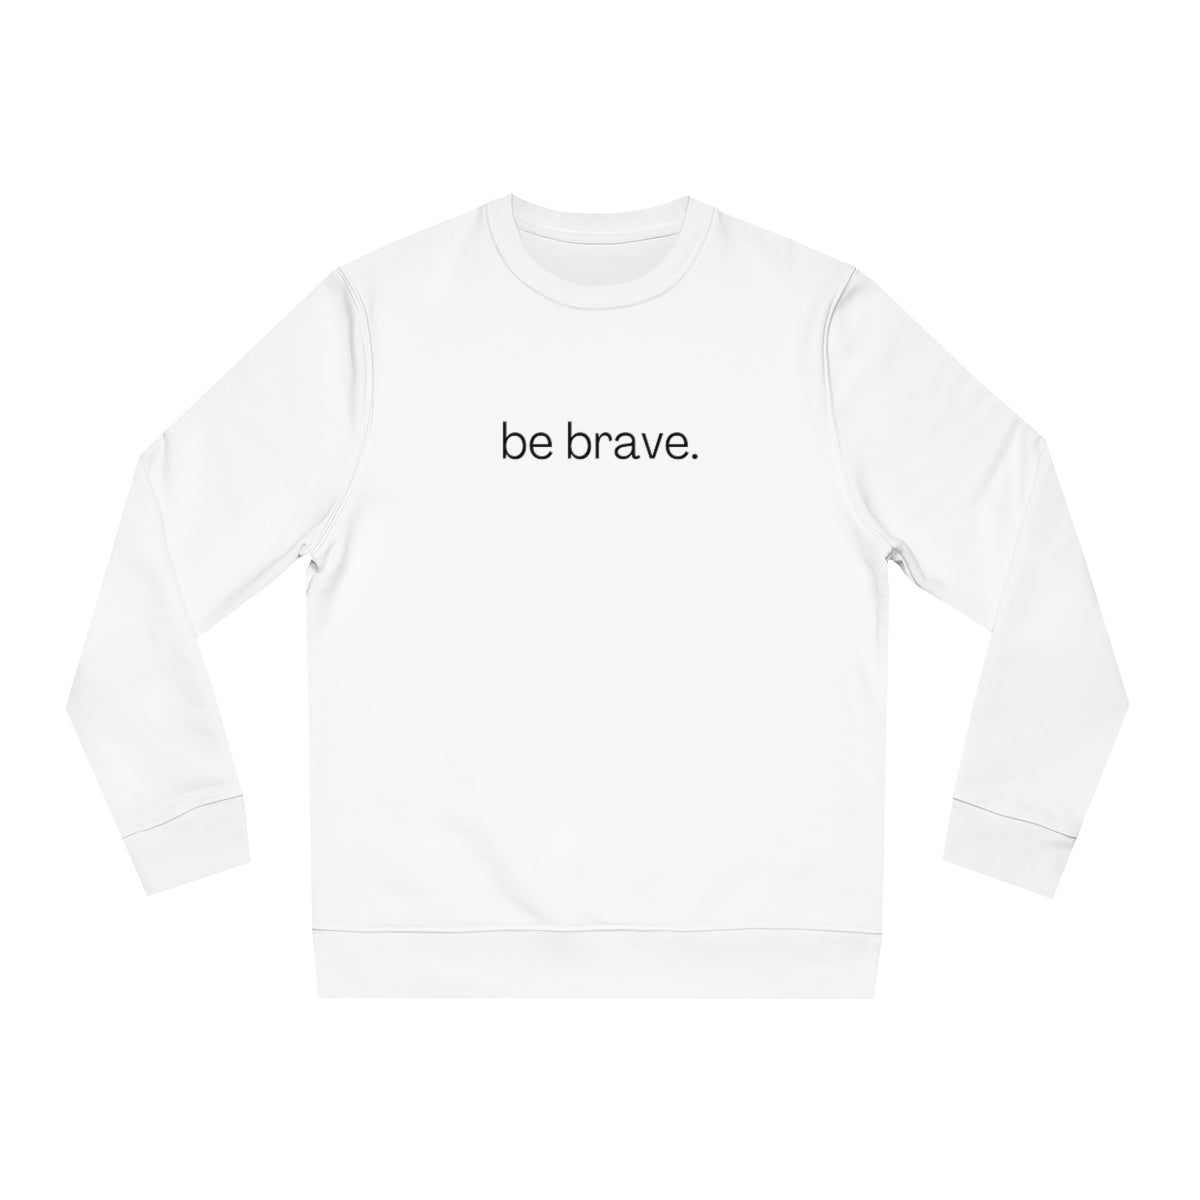 be brave. - Unisex Crewneck